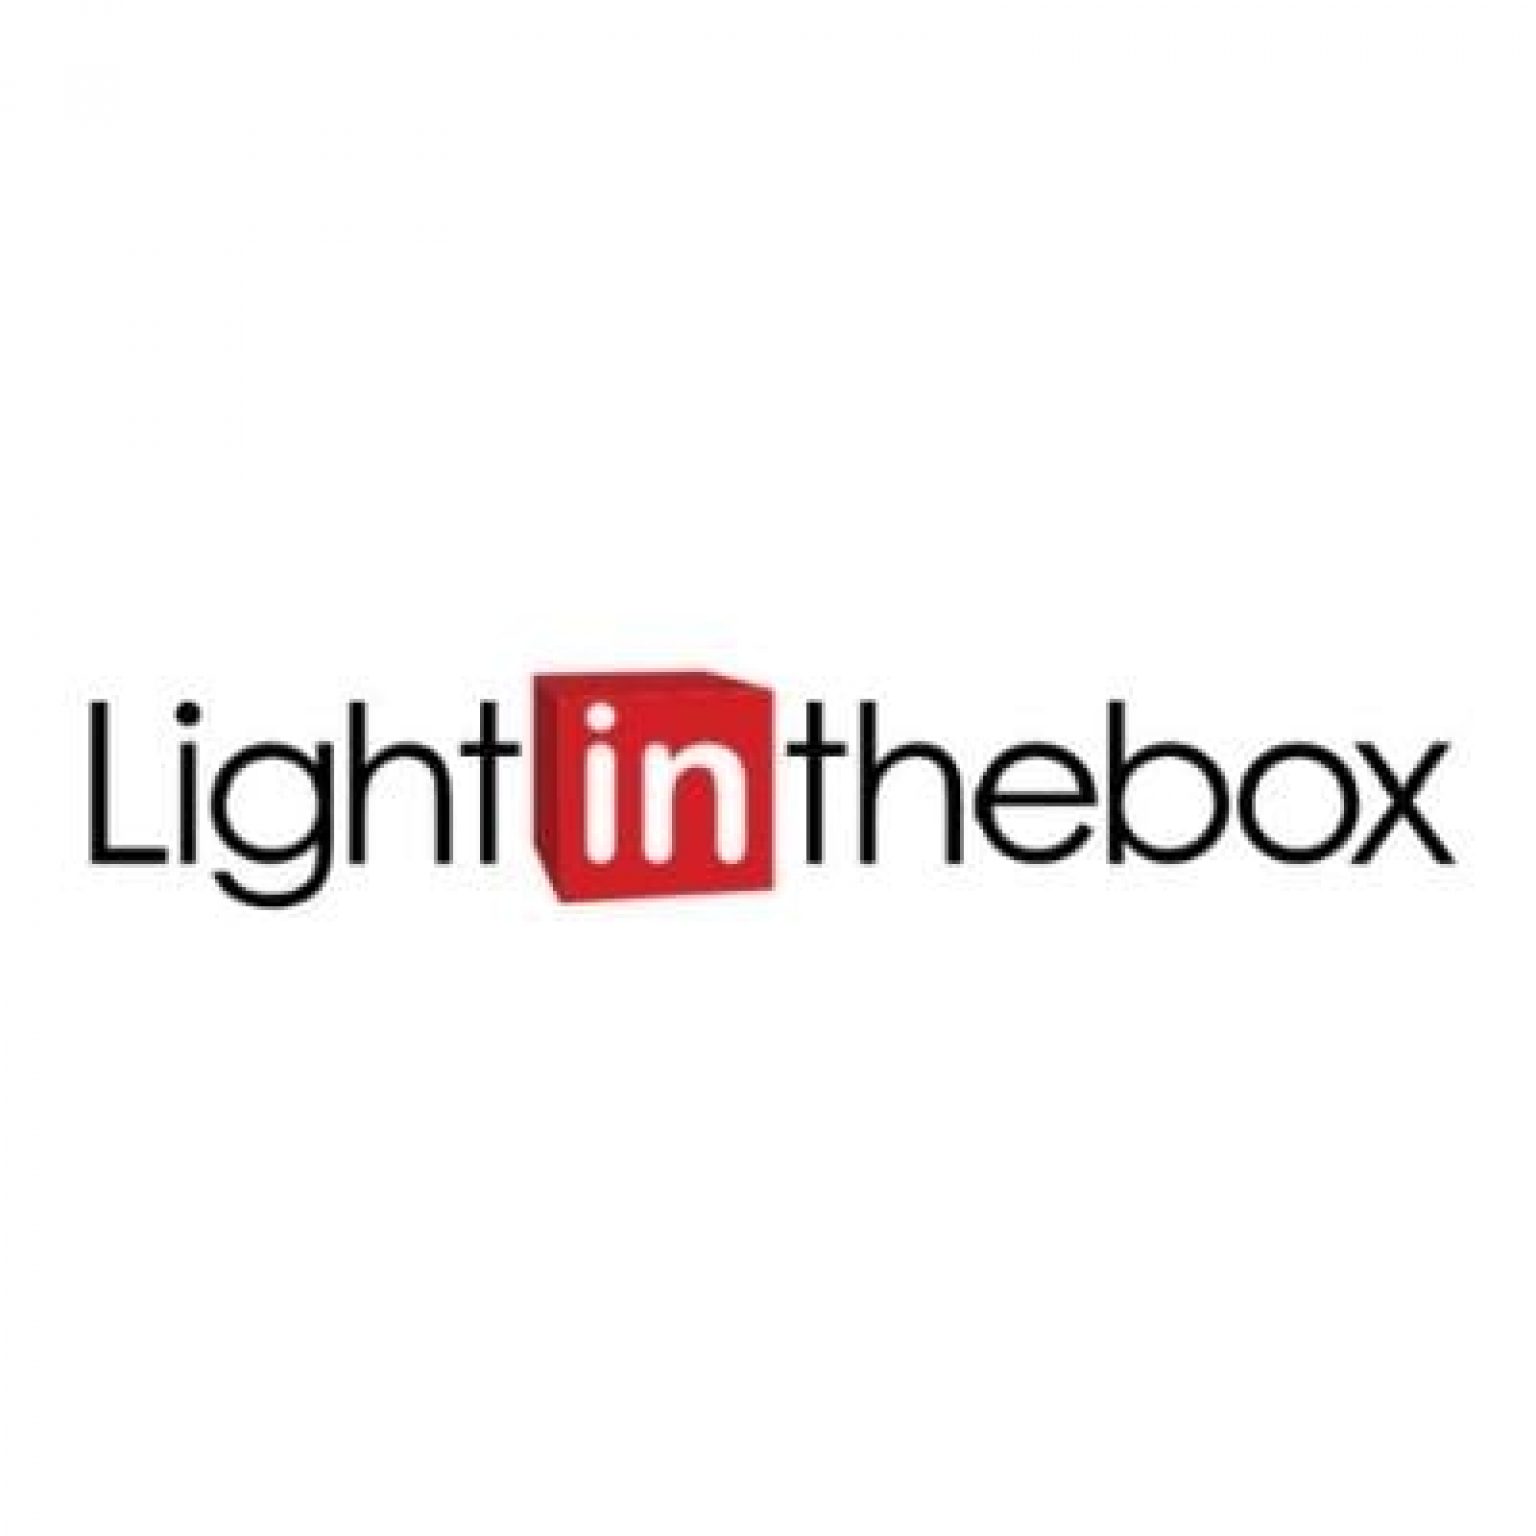 Light In The Box Logo 1536x1536 